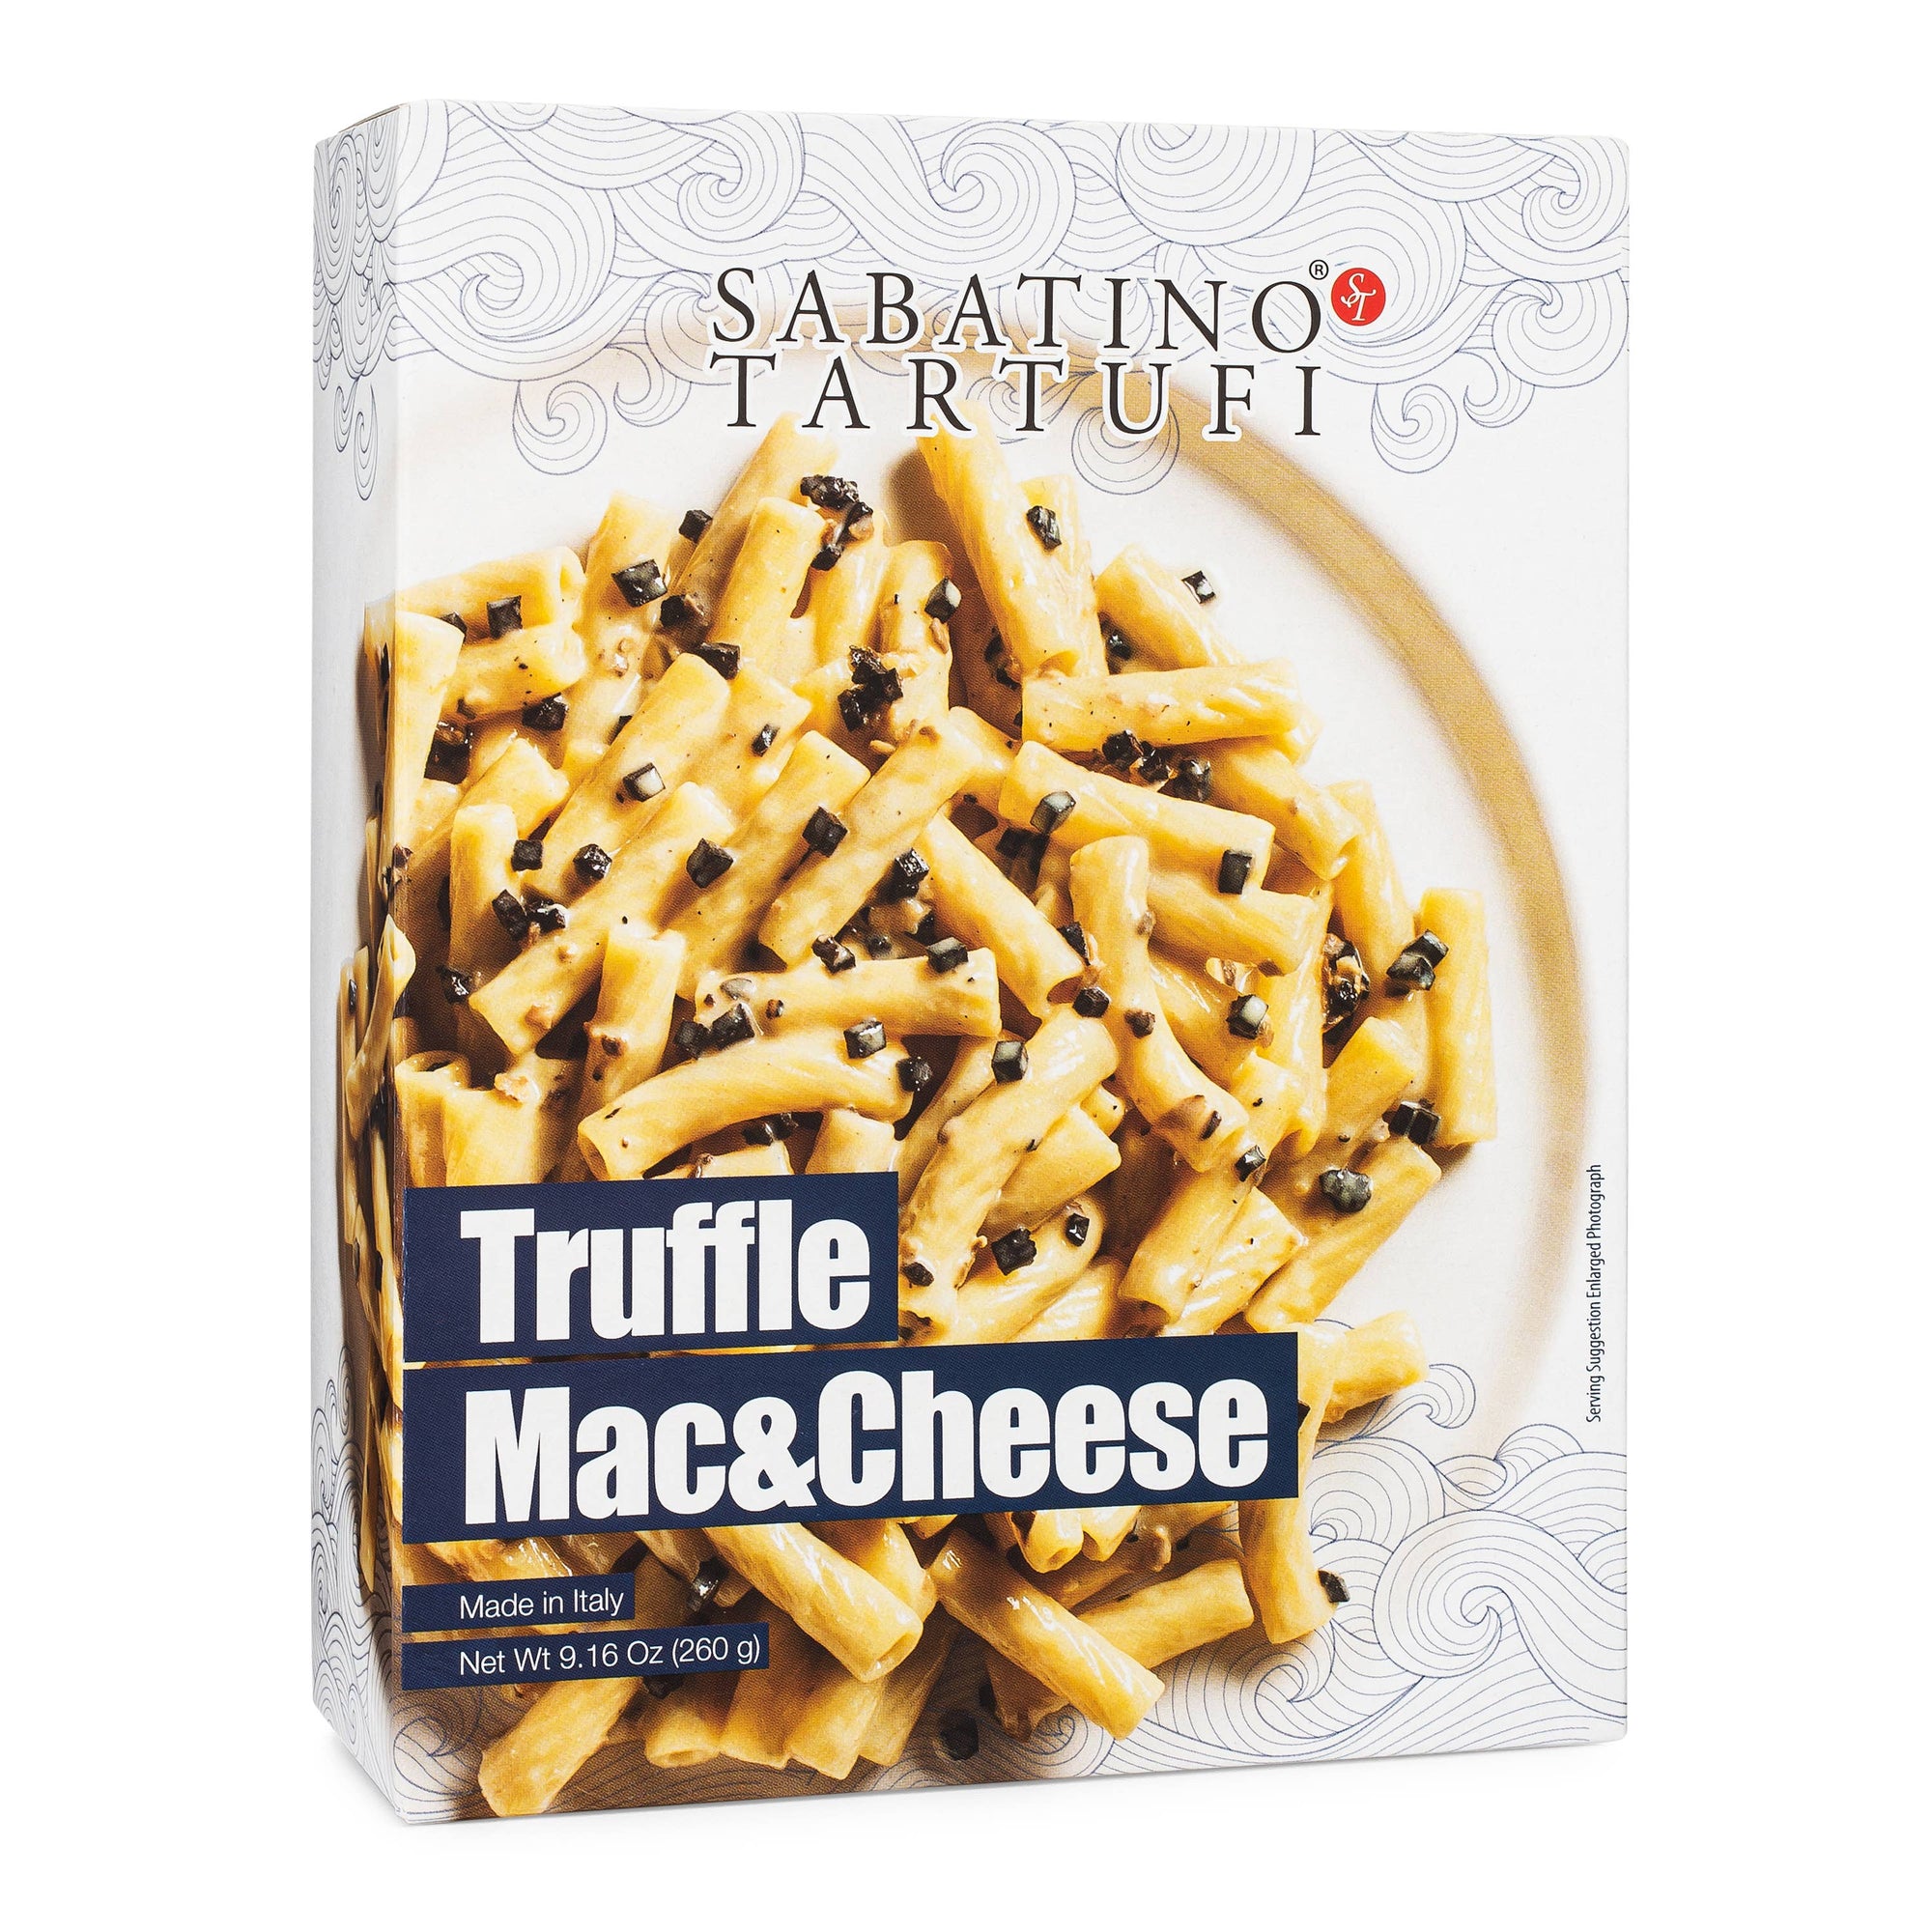 Truffled Mac & Cheese